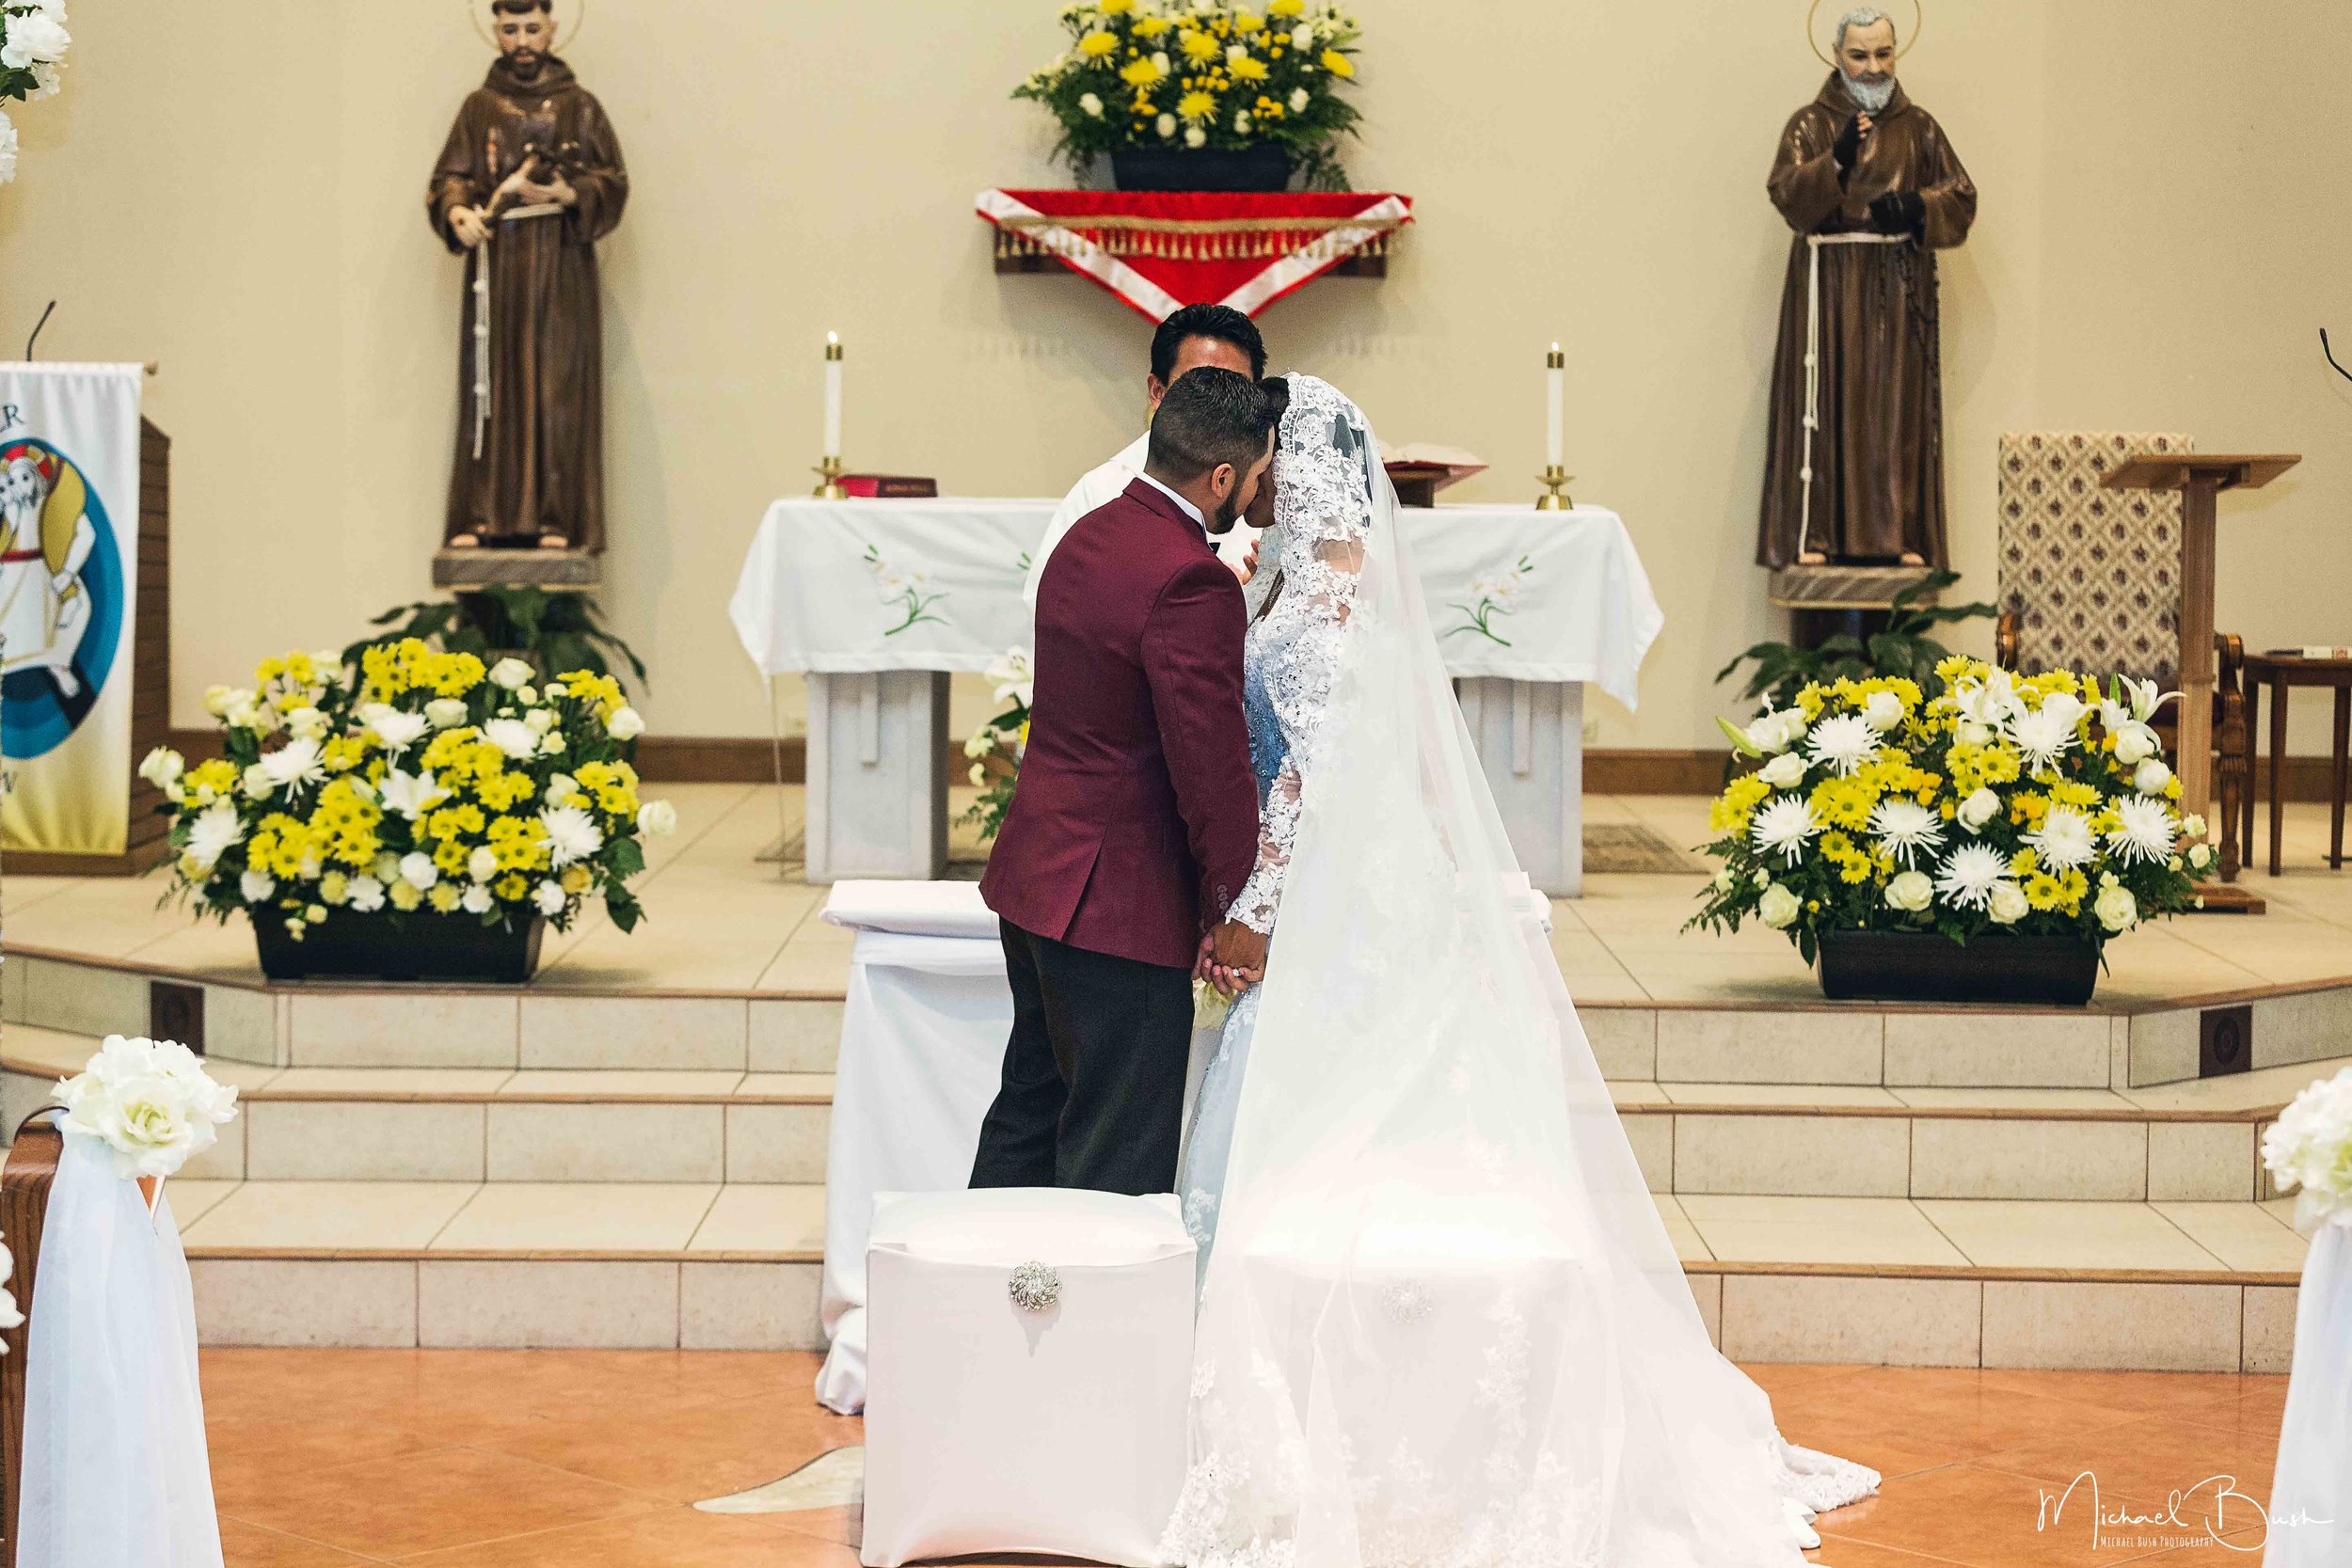 Wedding-Details-Bride-Fort Worth-colors-Ceremony-weddingceremony-brides-groom-ido-church-kiss-firstkiss.jpg